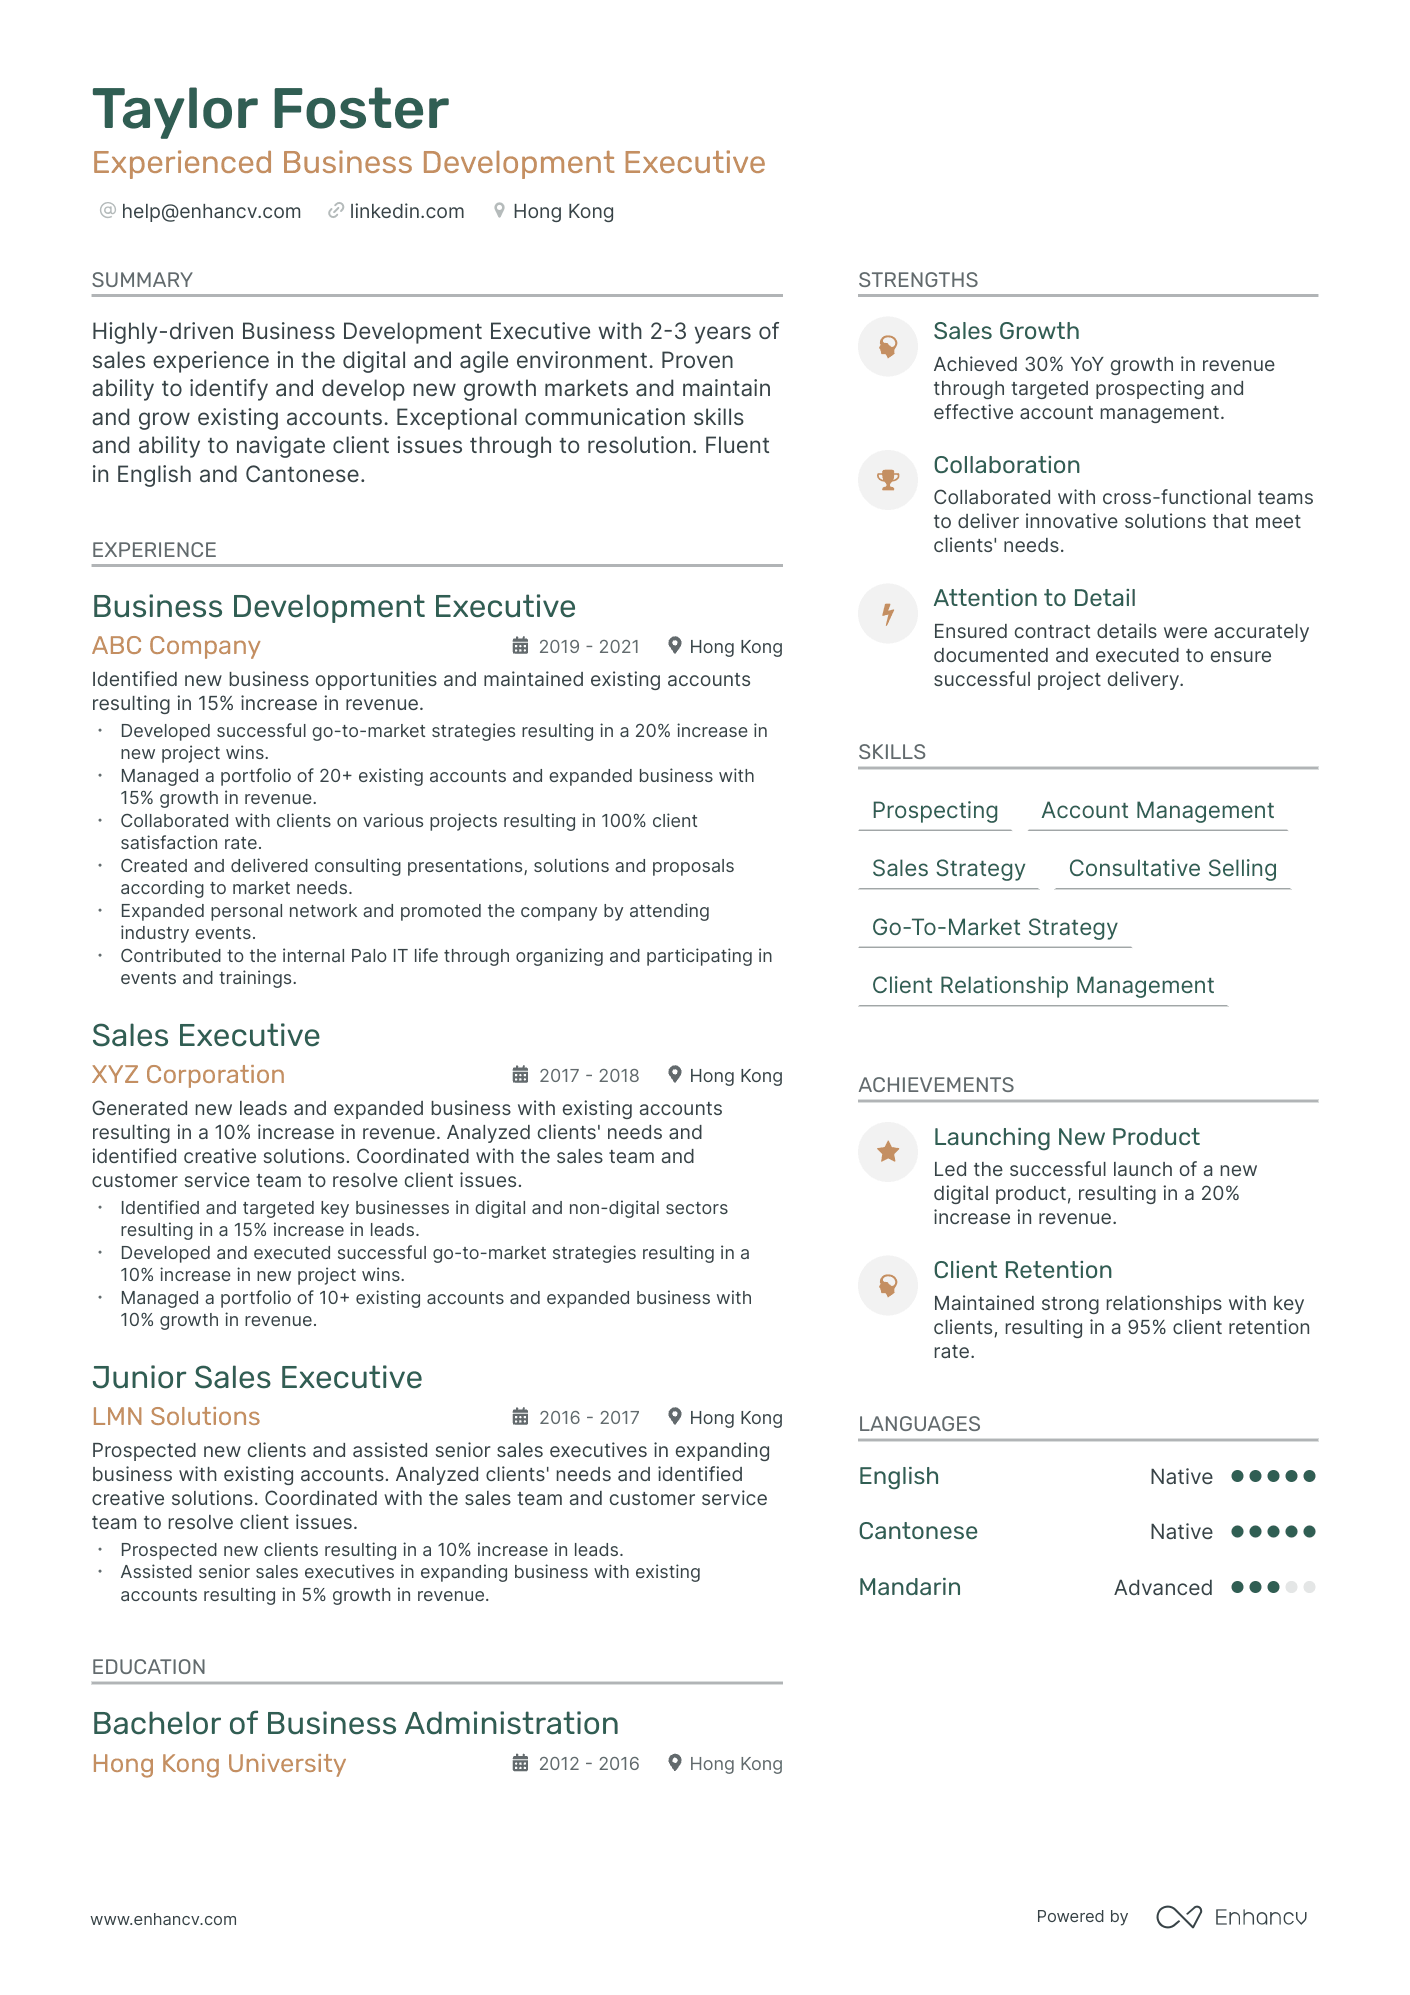 resume for bde profile